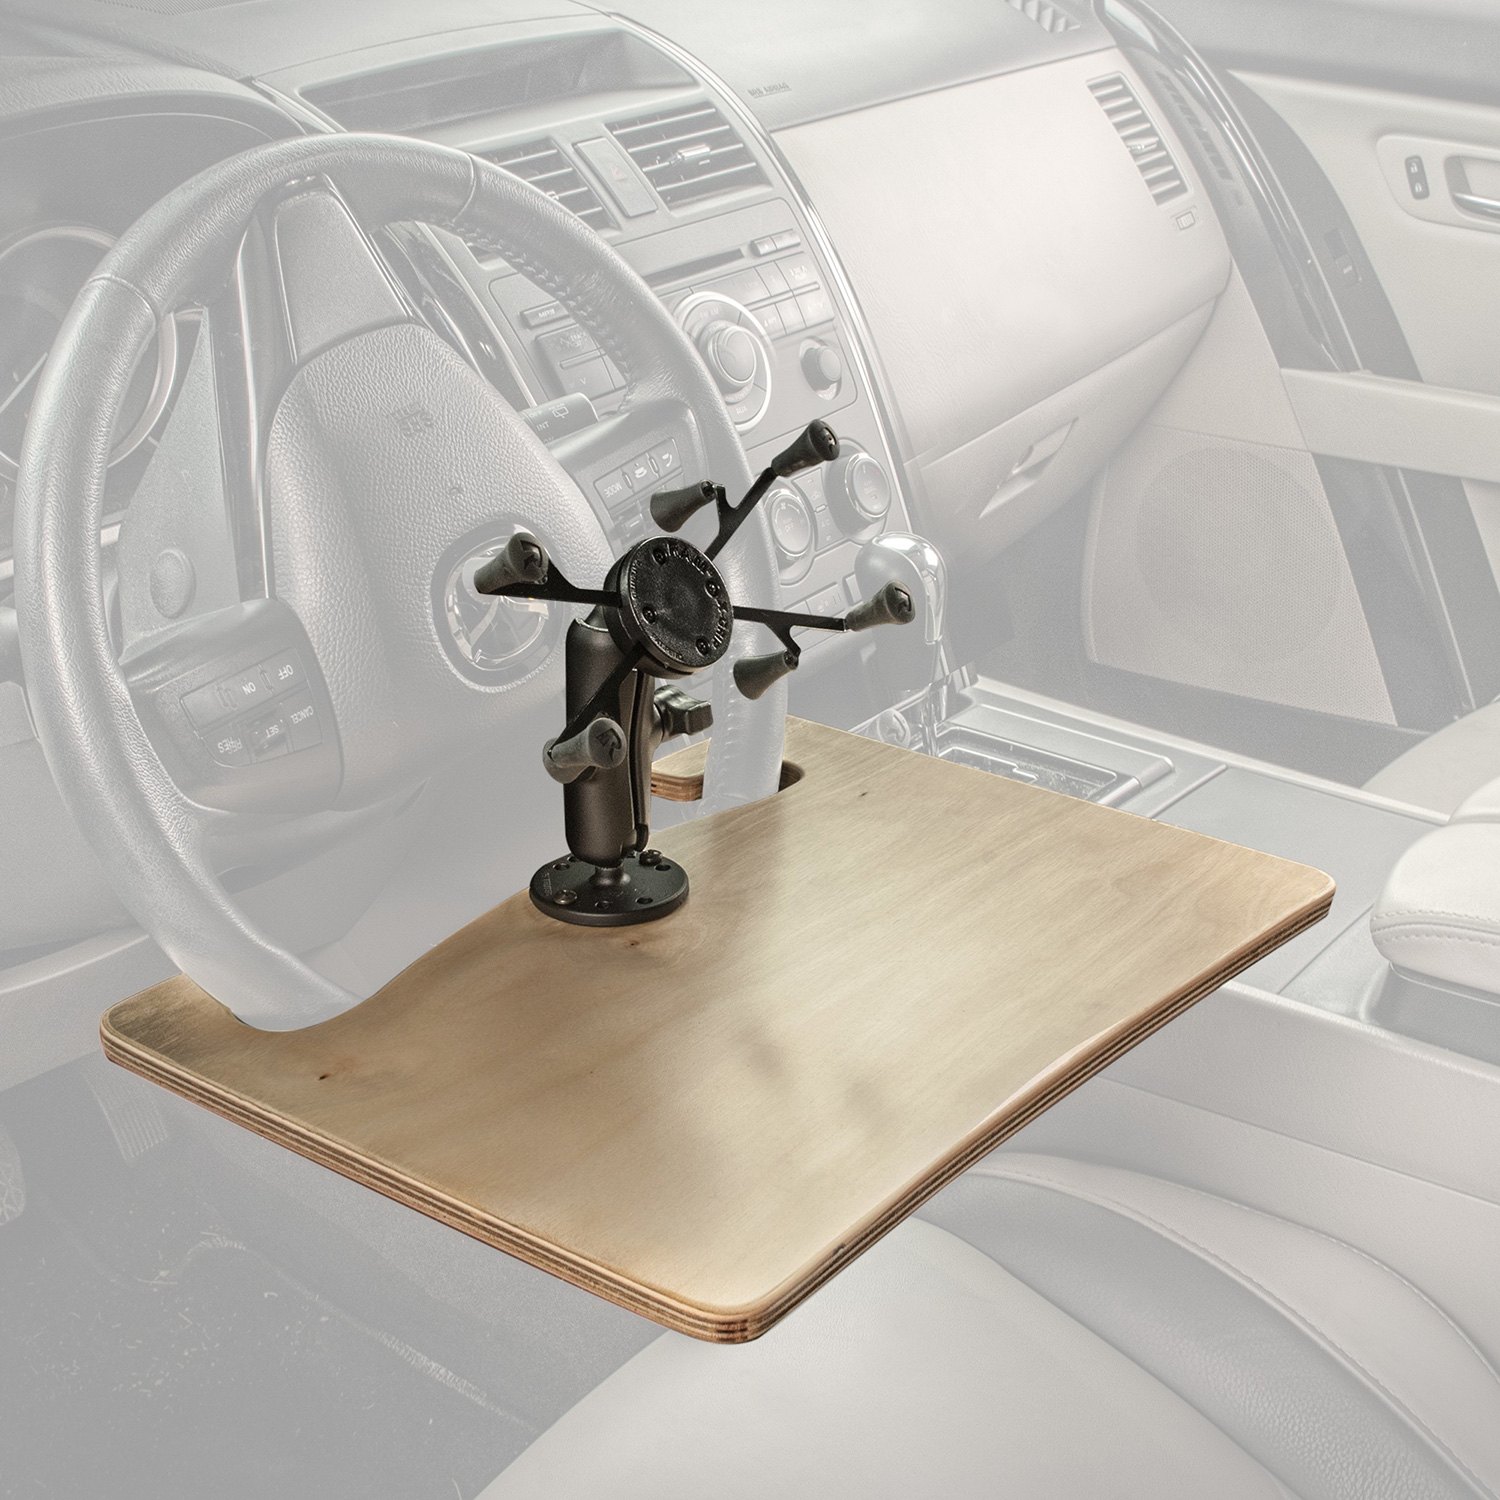 AutoExec WMEX-03 Wheelmate Extreme Vehicle Desk with 7 X-Grip Tablet Mount 